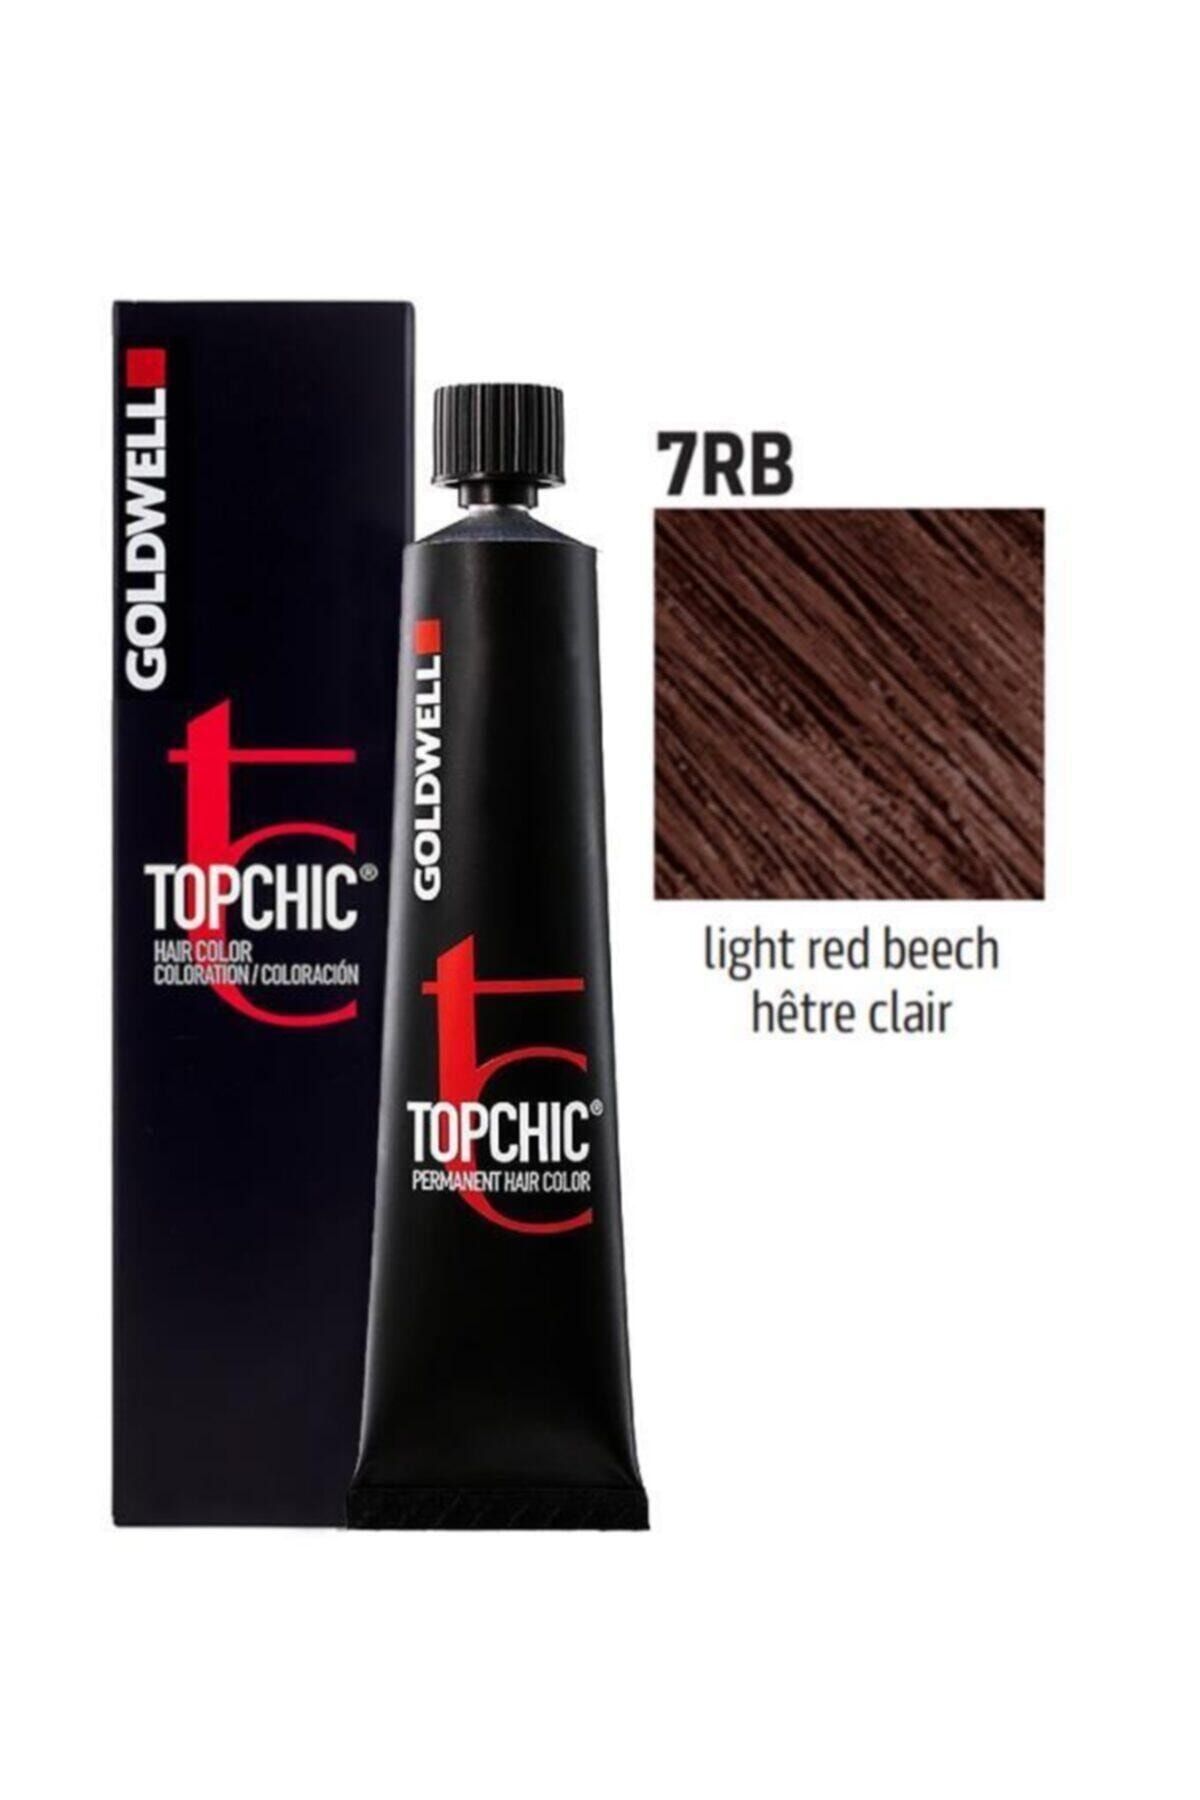 GOLDWELL 7rb Orta Kumral Kızıl Kahve Topchich Kalıcı Saç Boyası 60 ml